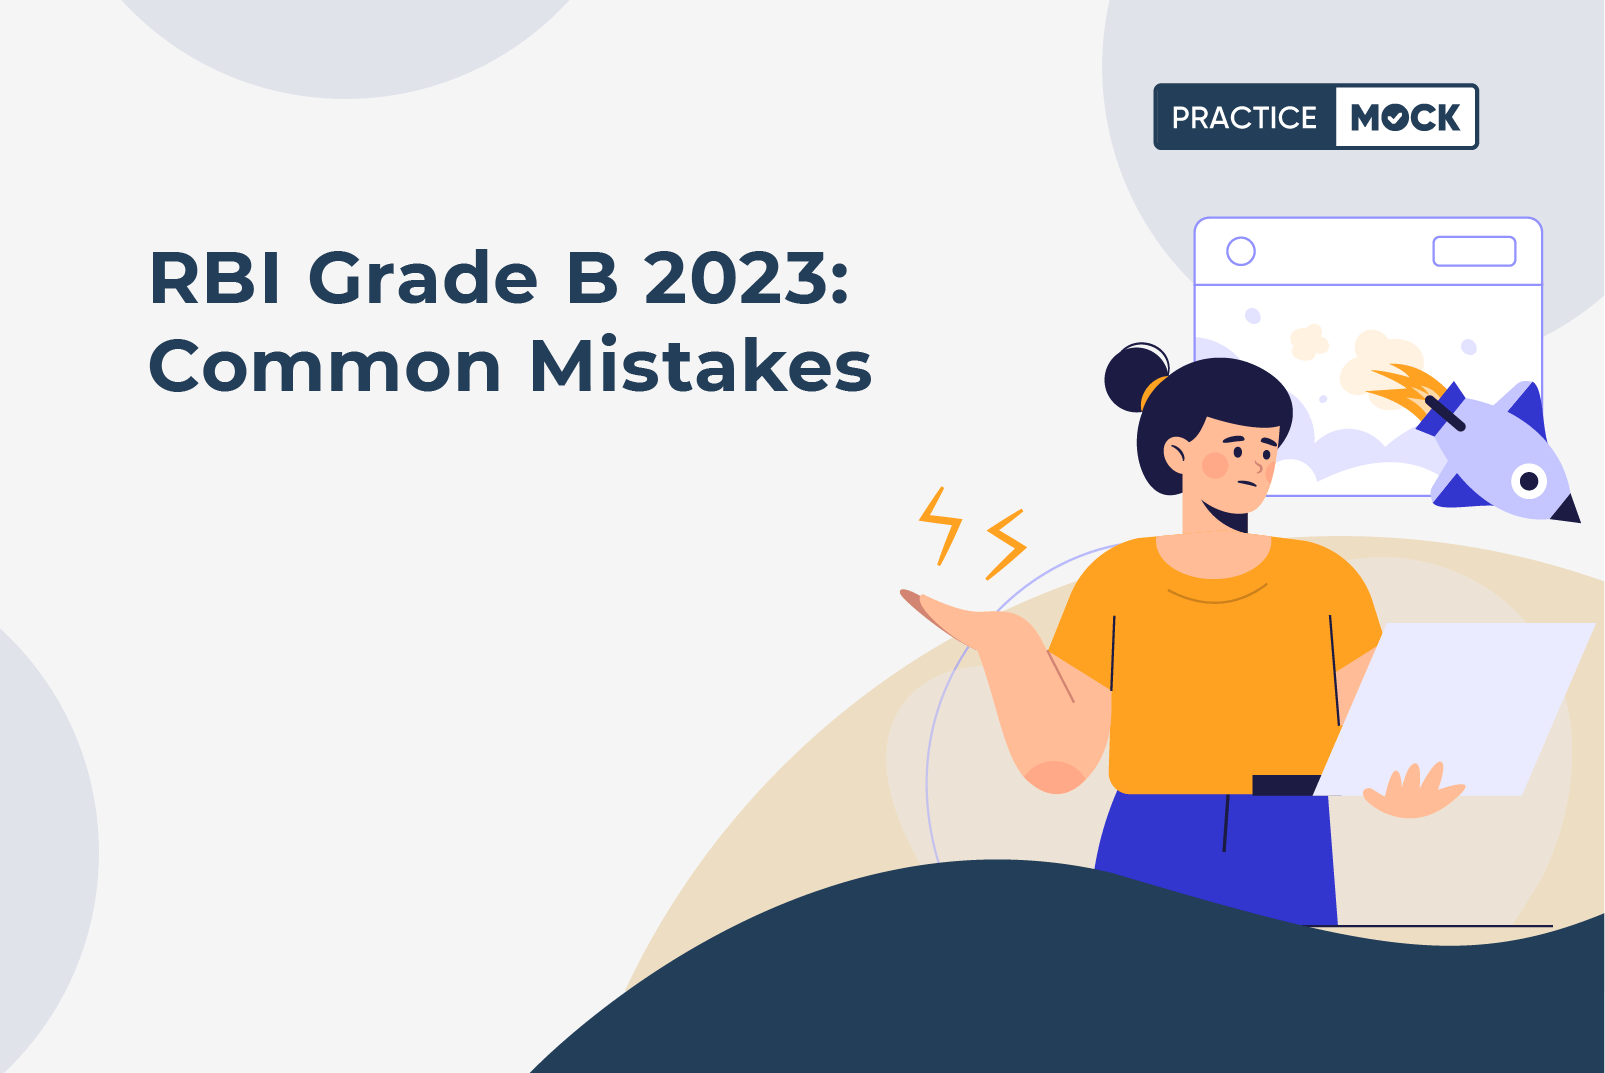 RBI Grade B 2023 - Common Mistakes